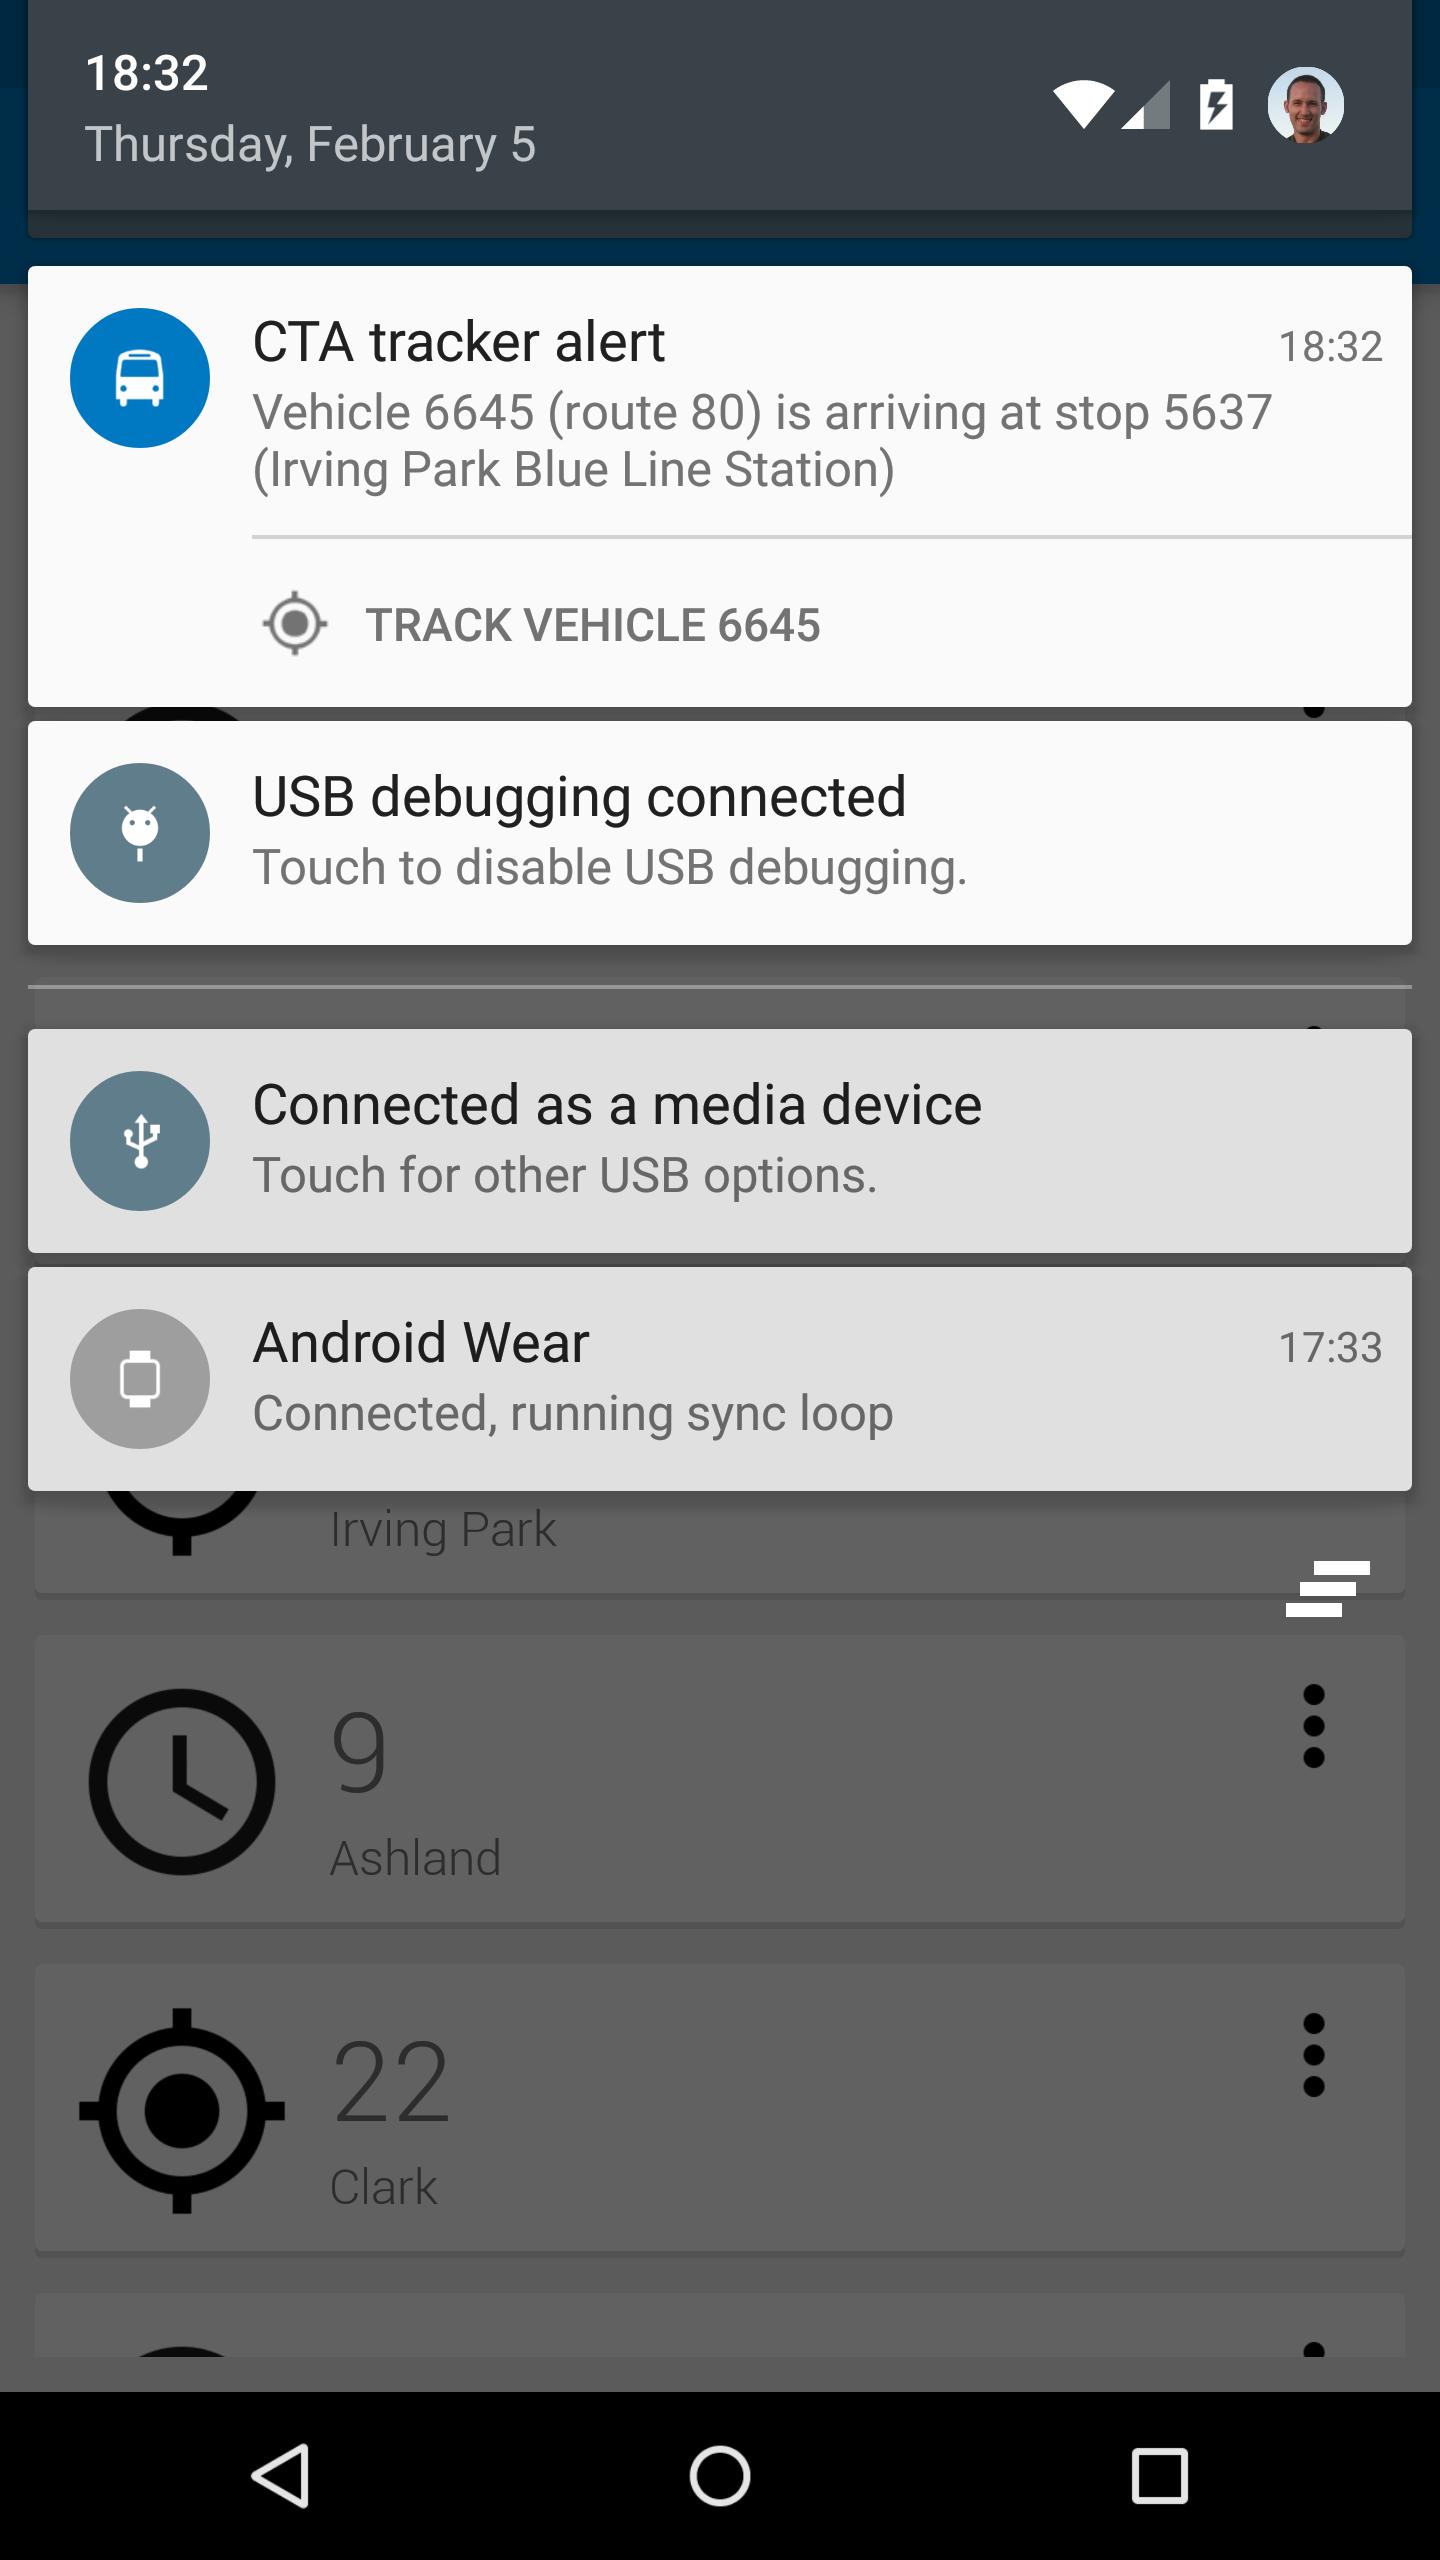 Uta GB Tracker. Allow tracking